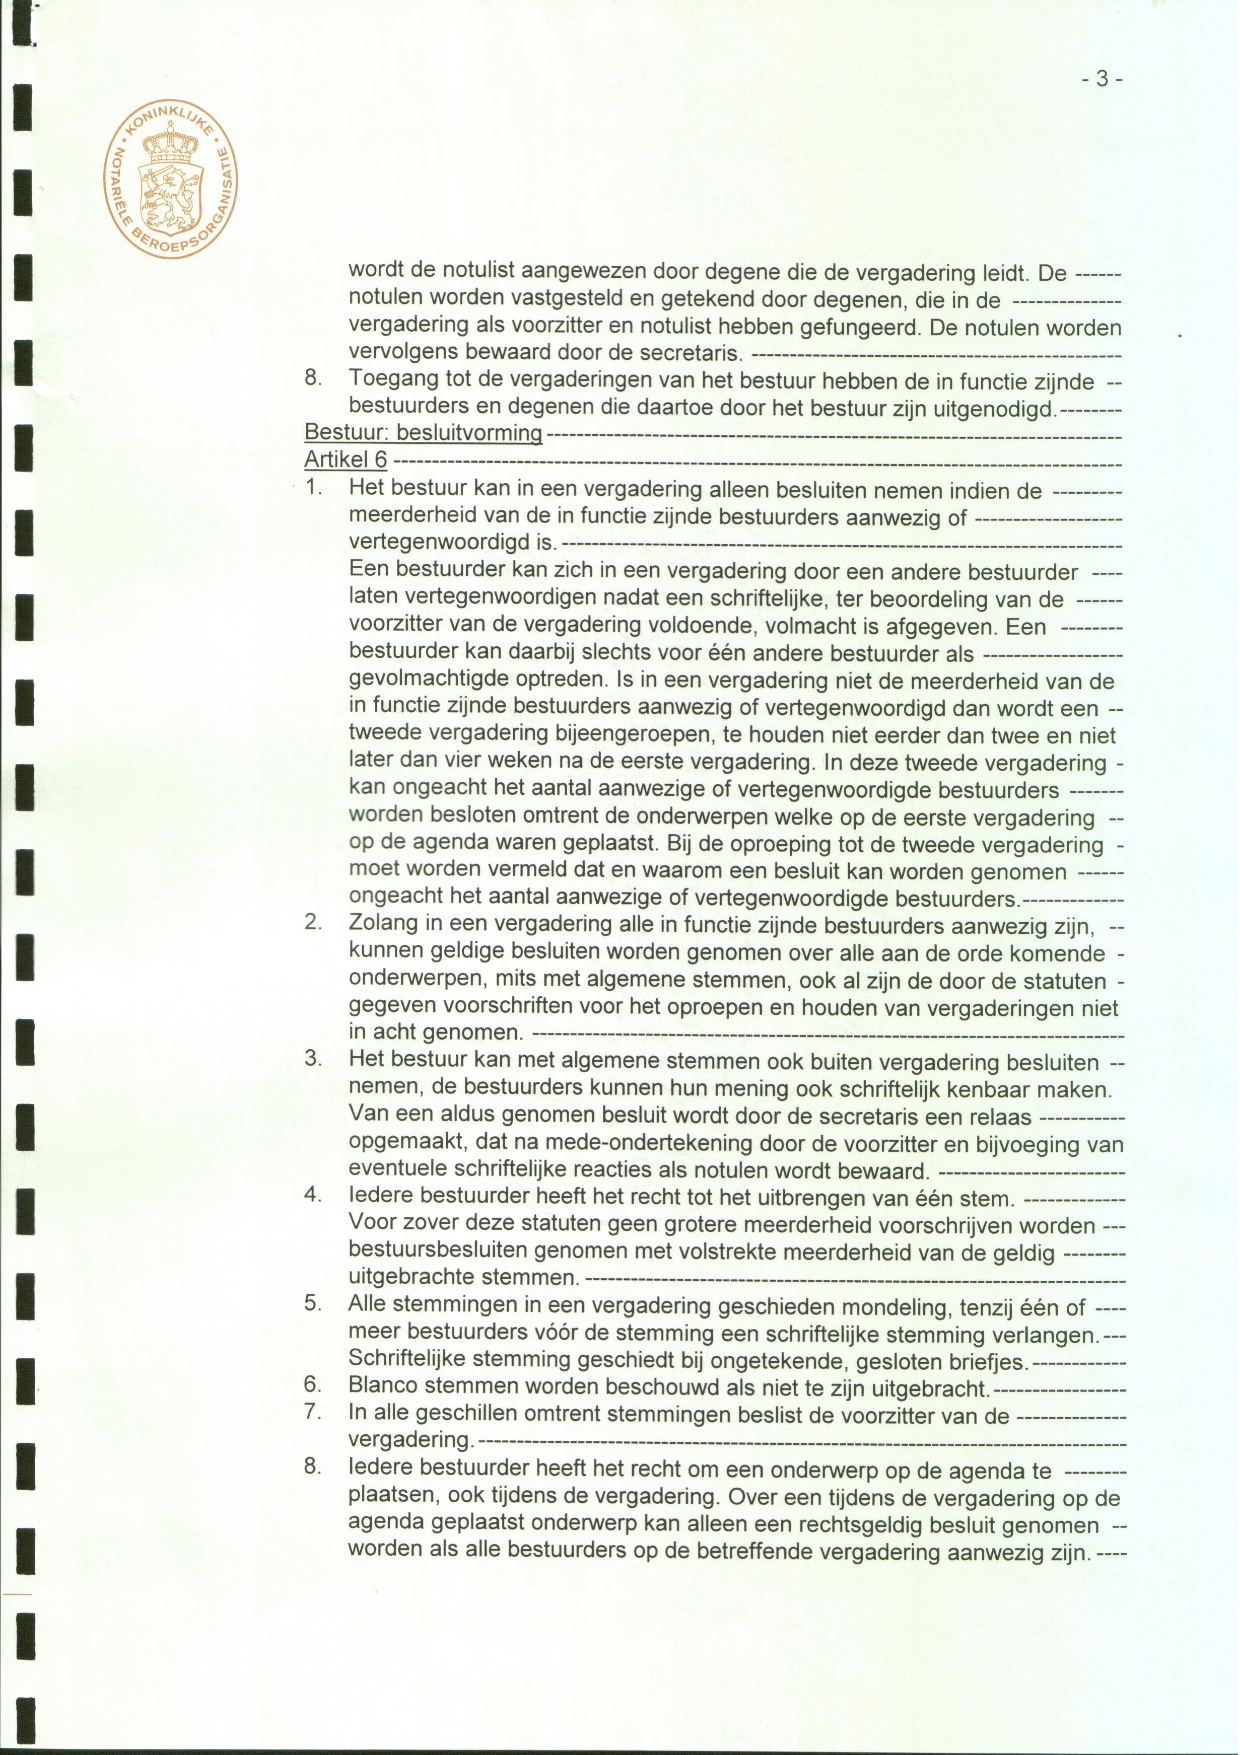 Statuten 15 apr 2010 pagina 3.jpg